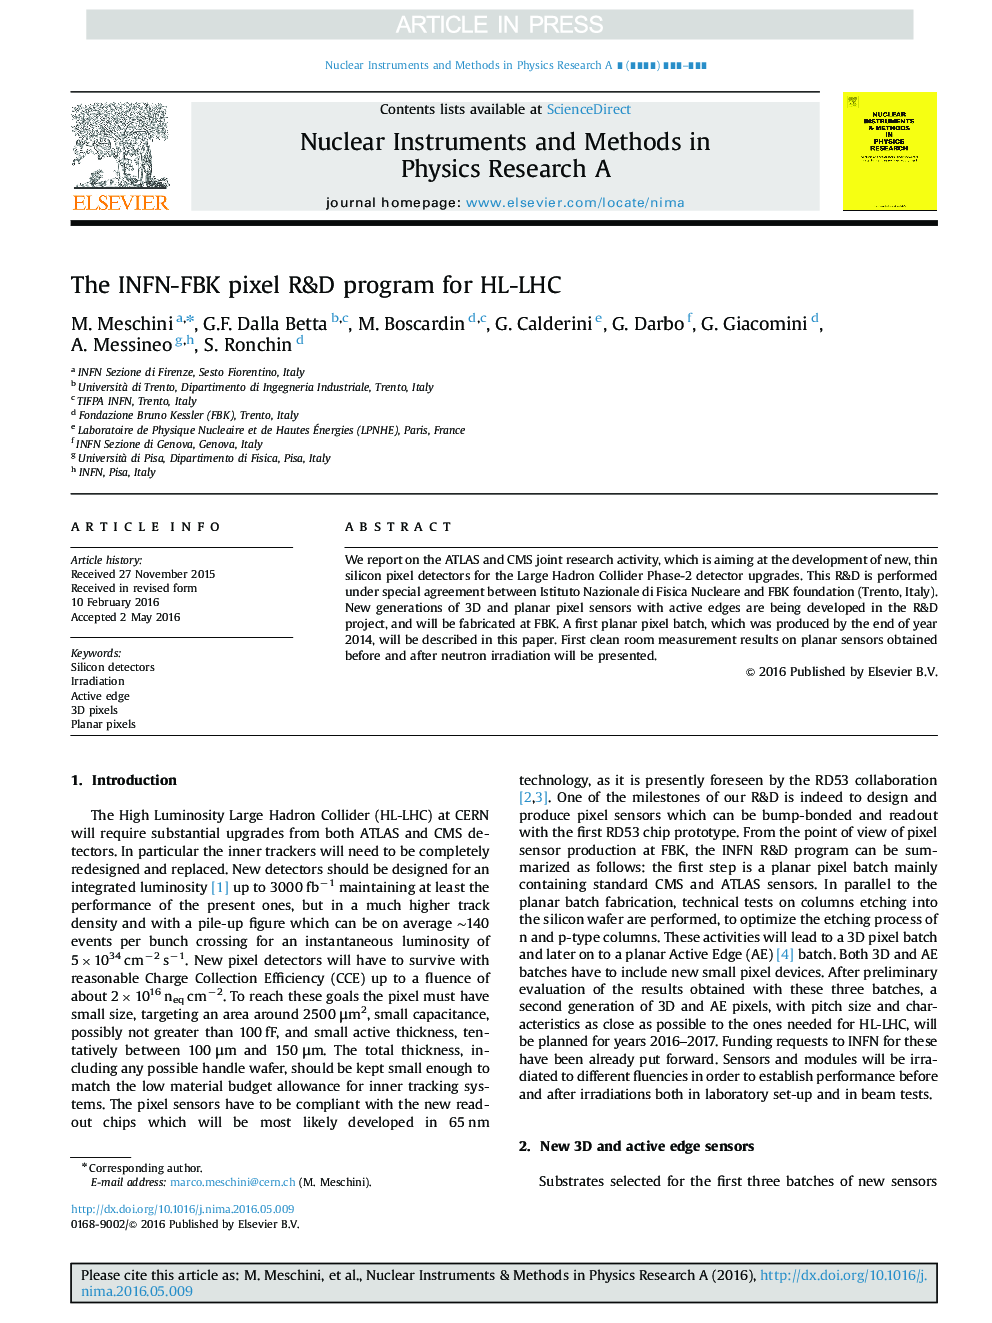 The INFN-FBK pixel R&D program for HL-LHC